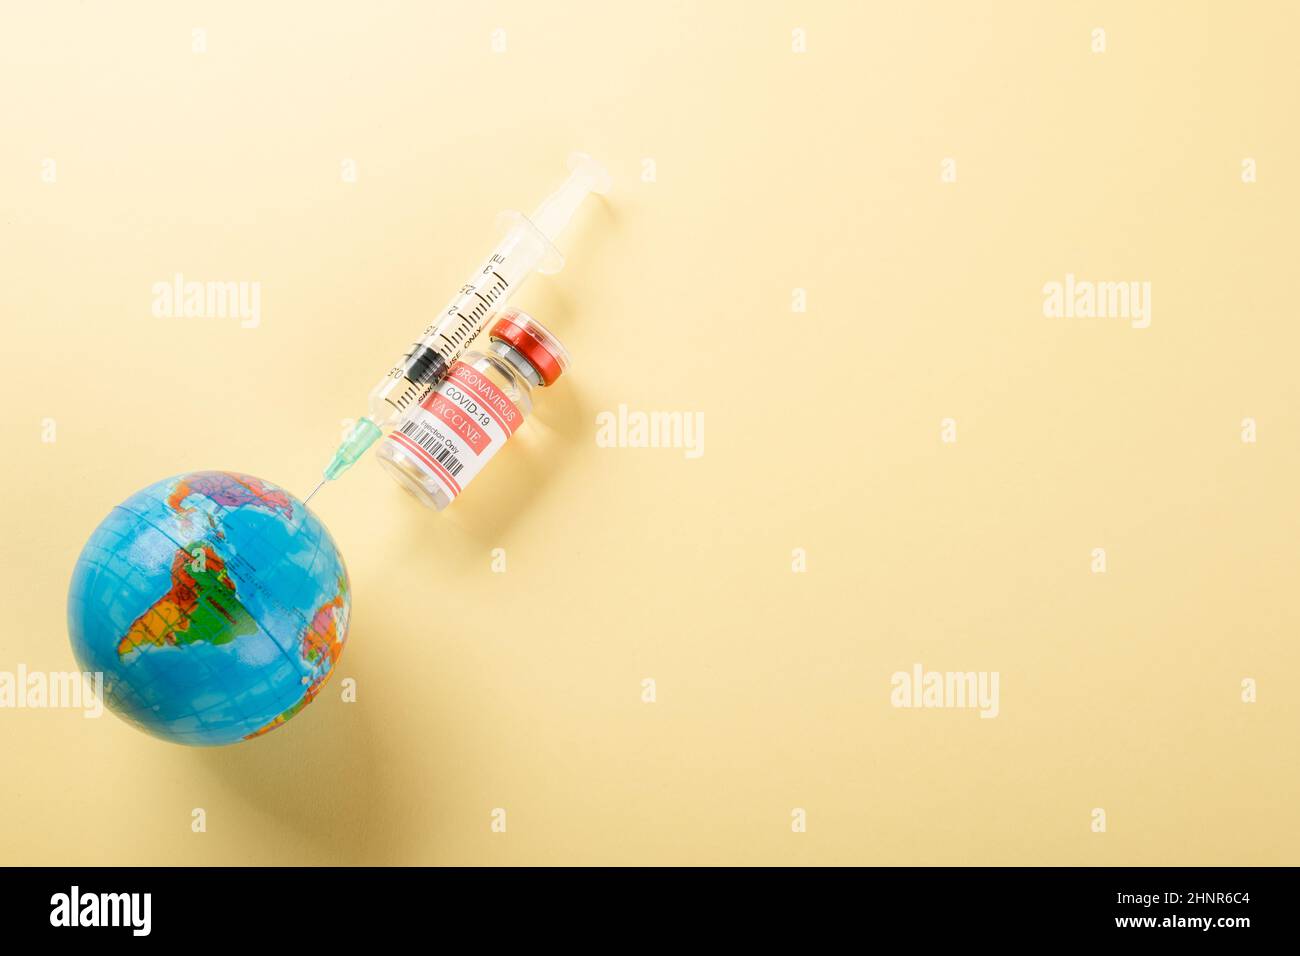 Vaccine vials bottles, syringes for vaccination against coronavirus and globe Stock Photo